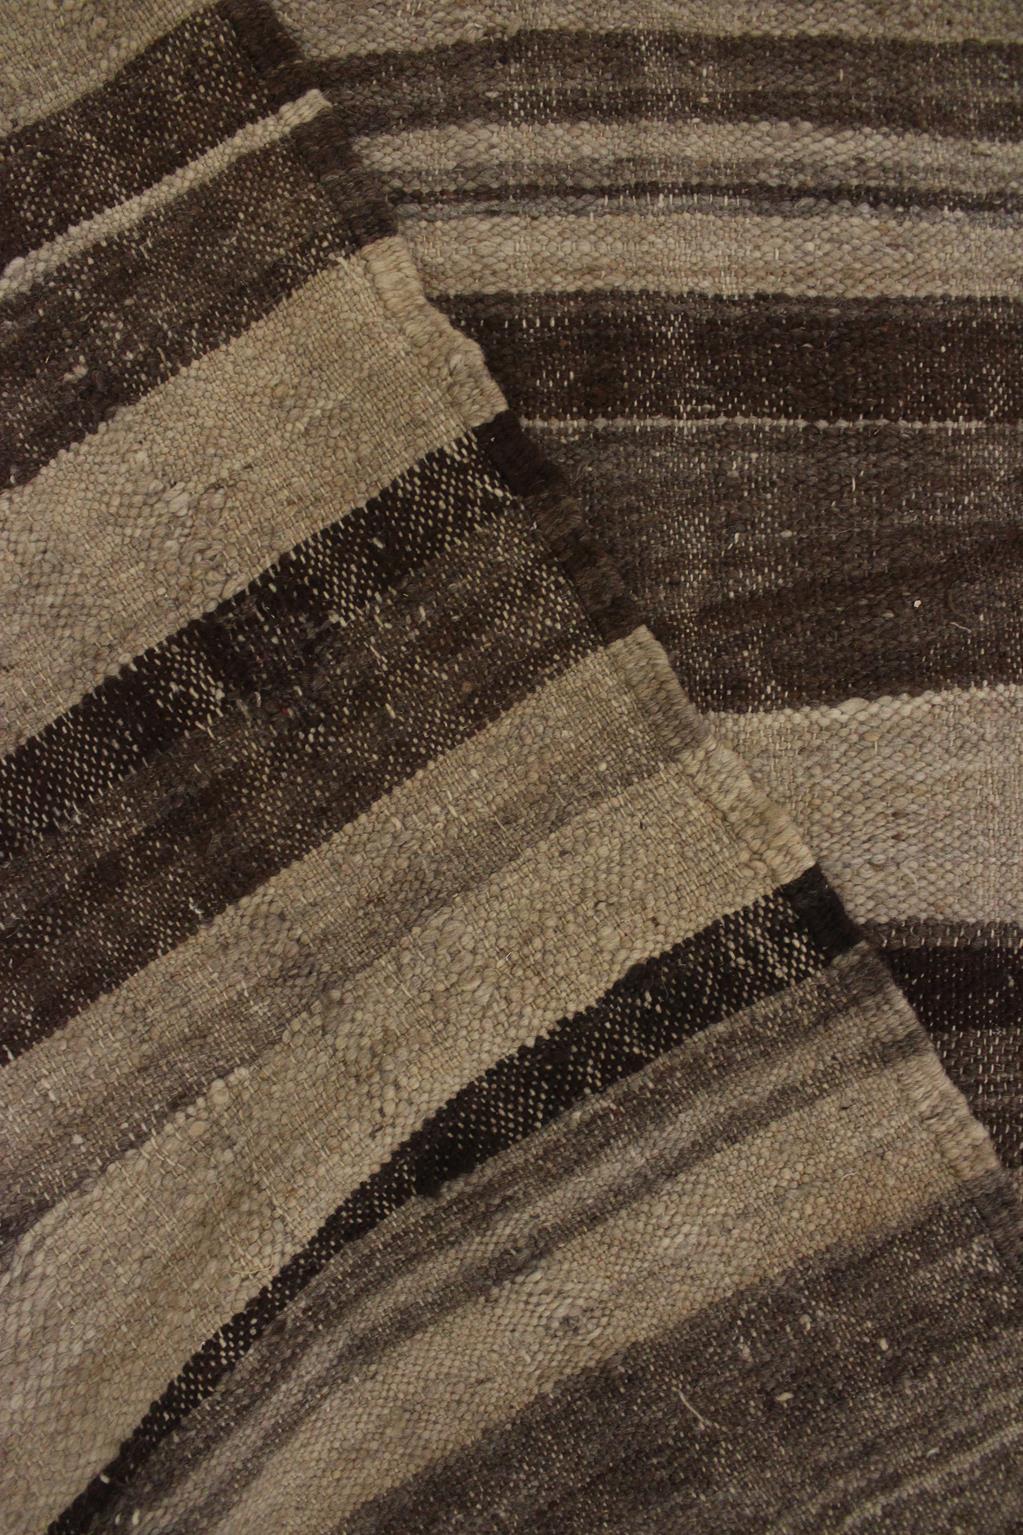 Vintage Moroccan Kilim rug - Stripes in beige+brown - 4.6x14.4feet / 142x440cm For Sale 7